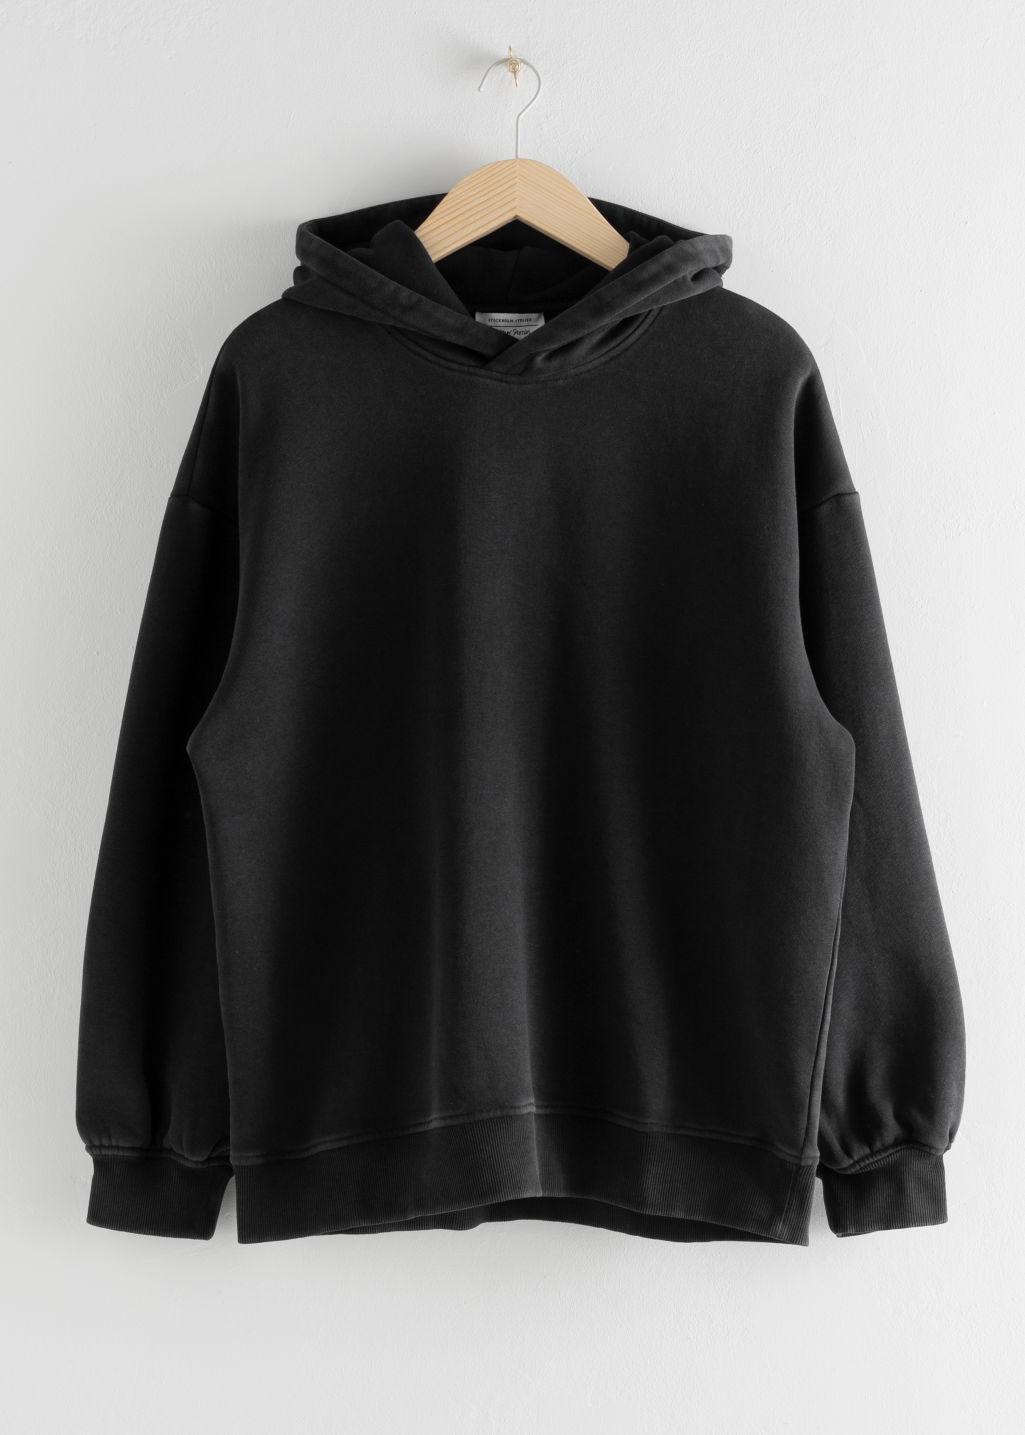 & Stories Oversized Boxy Sweatshirt Black | Lyst